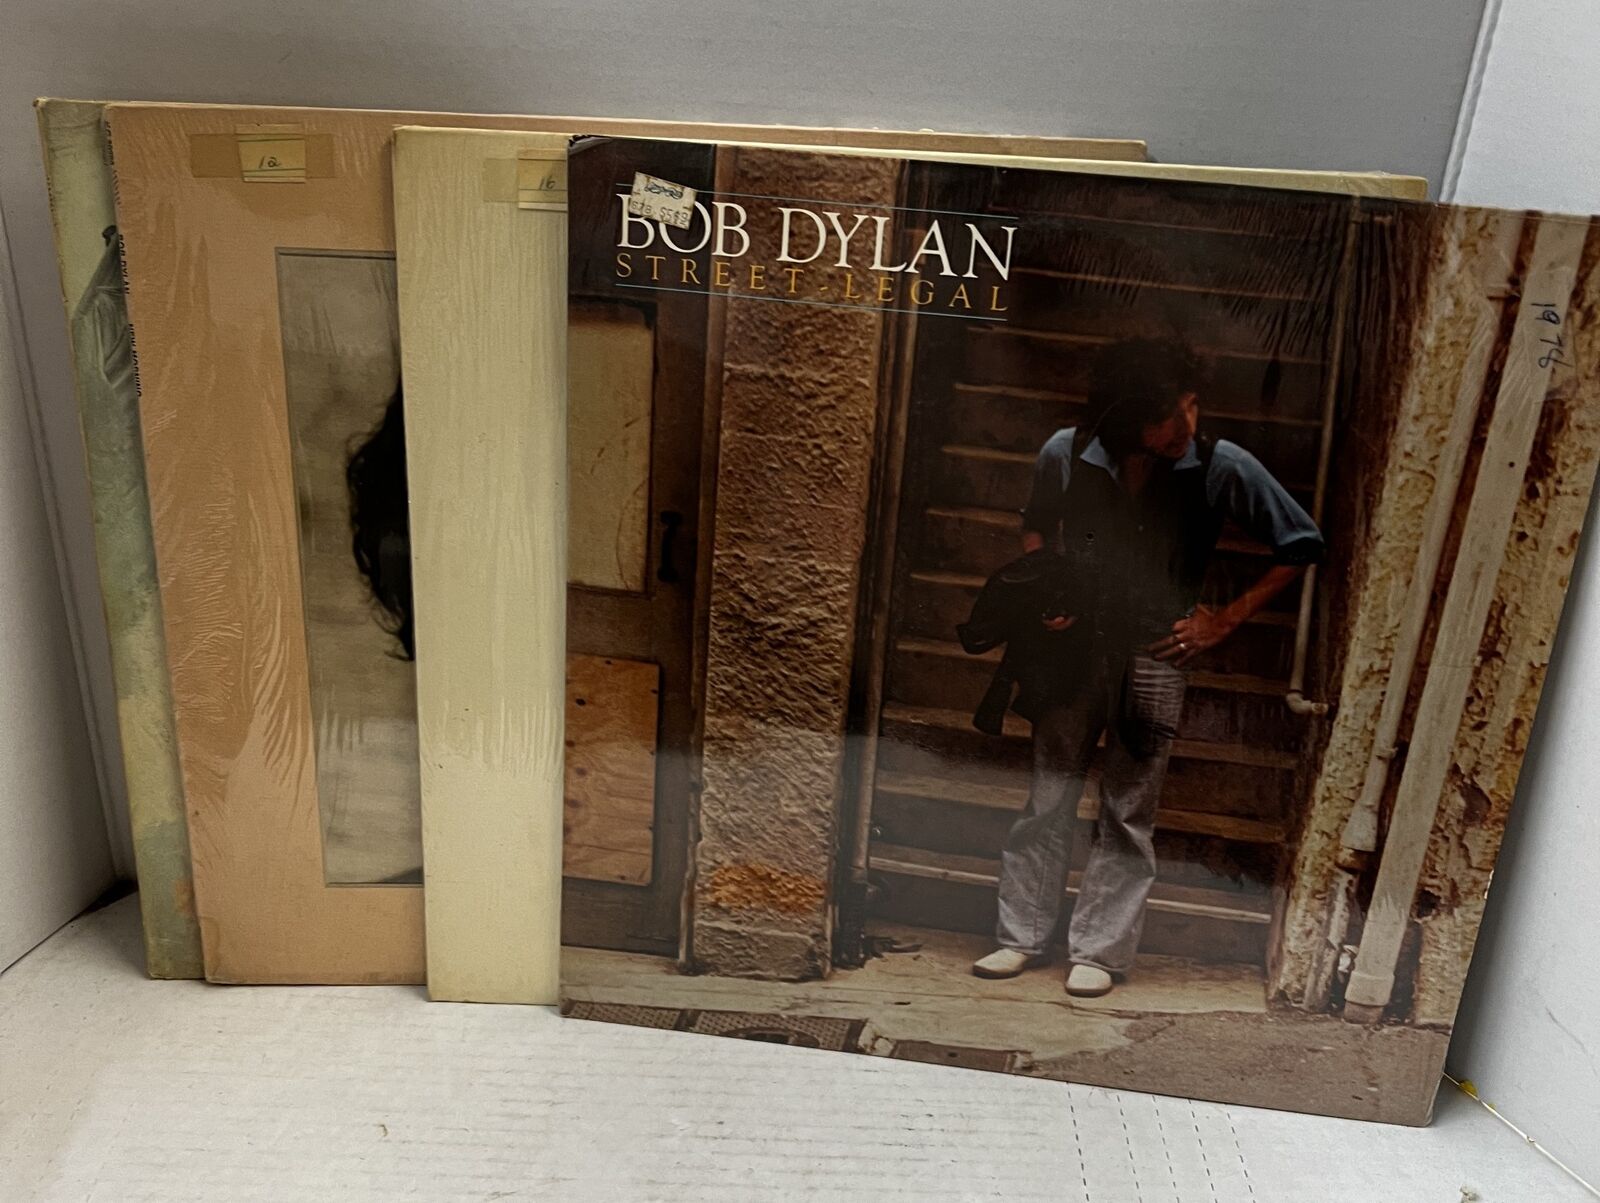 Lot of 4 Bob Dylan Vinyl LPs Street-Legal/Planet Waves/New Morning/Self Portrait